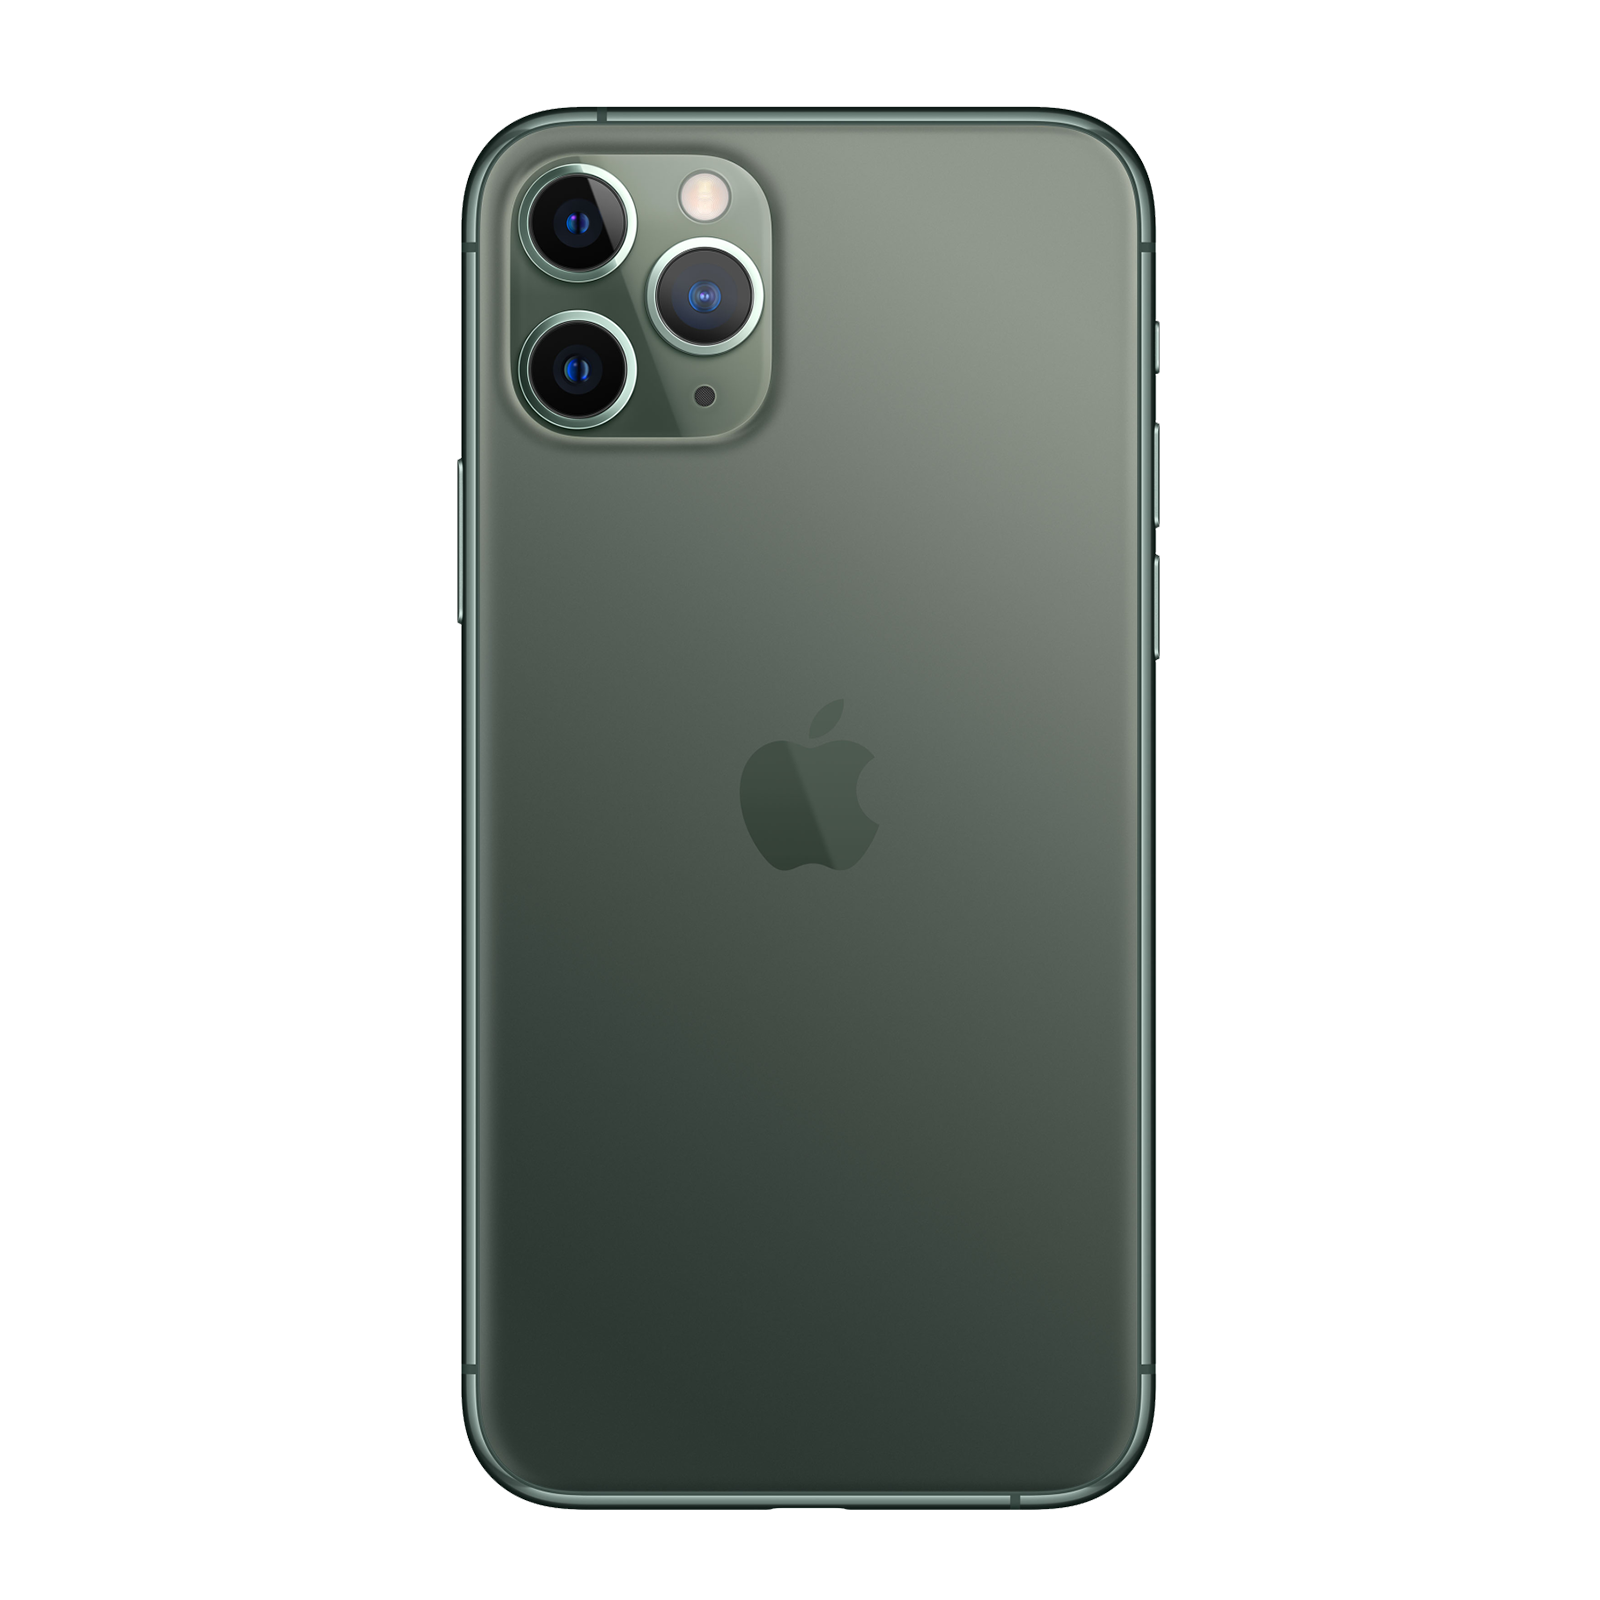 iPhone 11 Pro 256GB Midnight Green Good - Unlocked